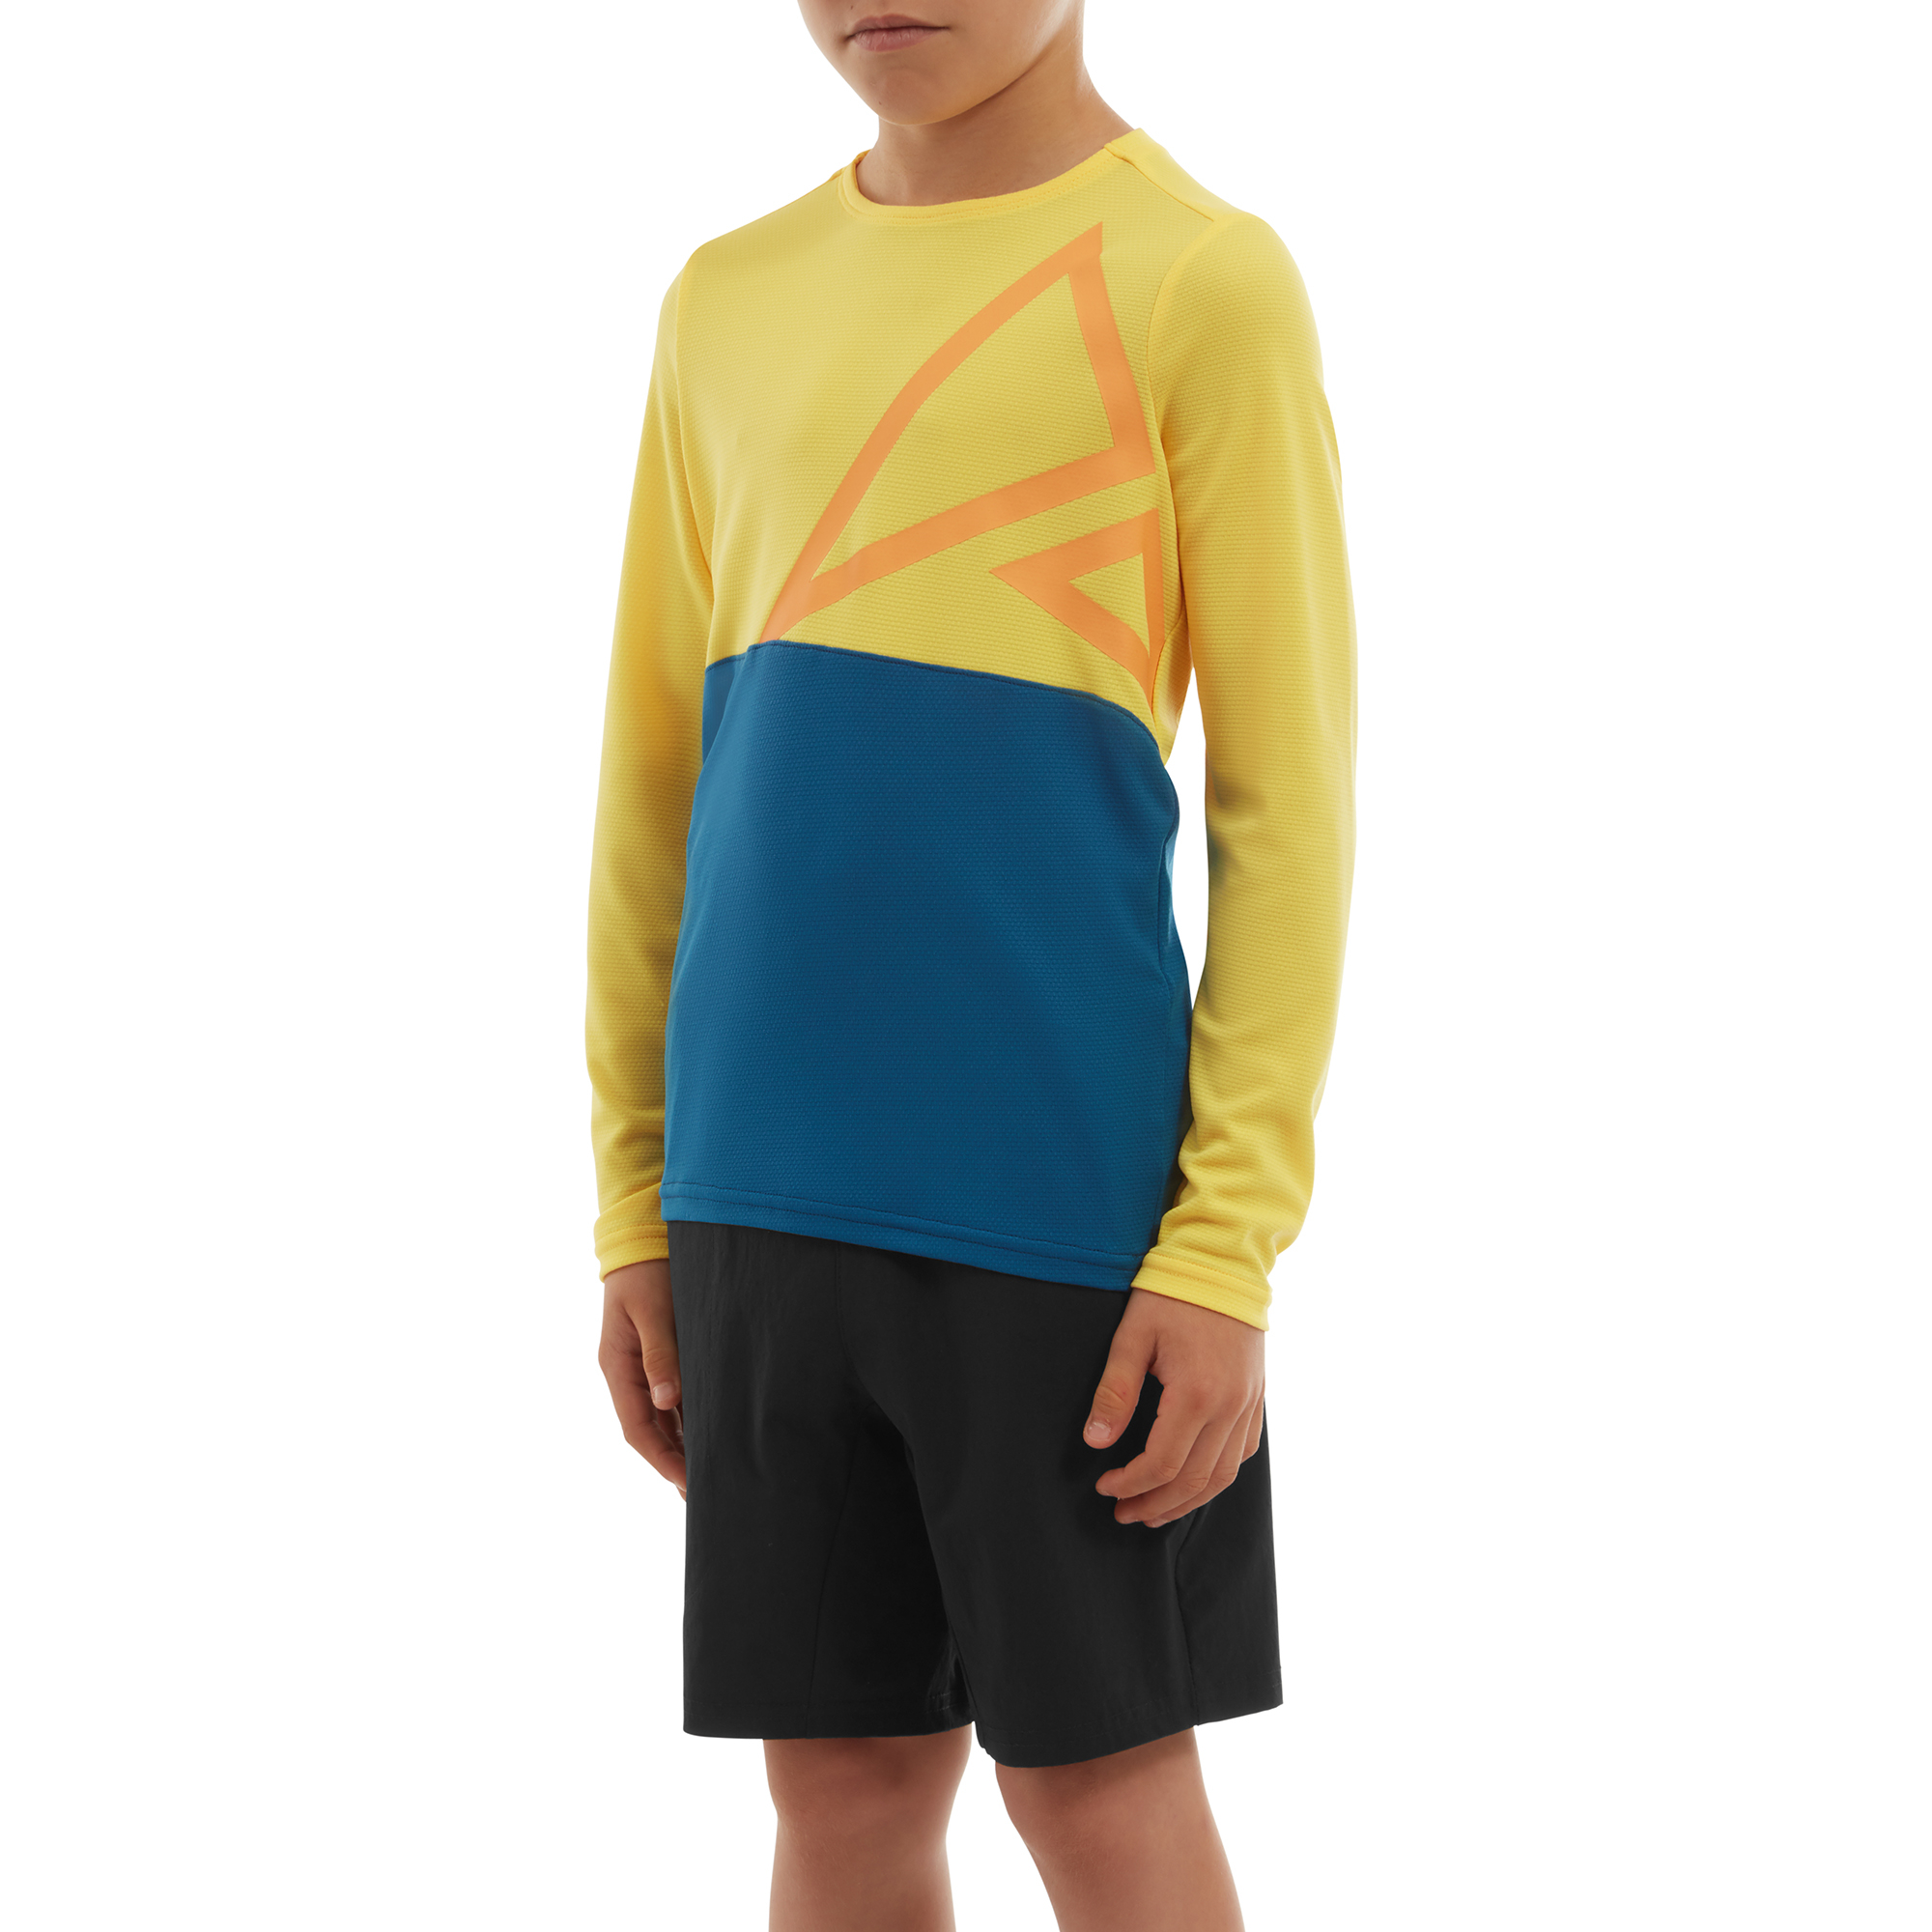 Altura  Spark Lightweight Kids Long Sleeve Jersey 7 to 8 Years YELLOW/BLUE